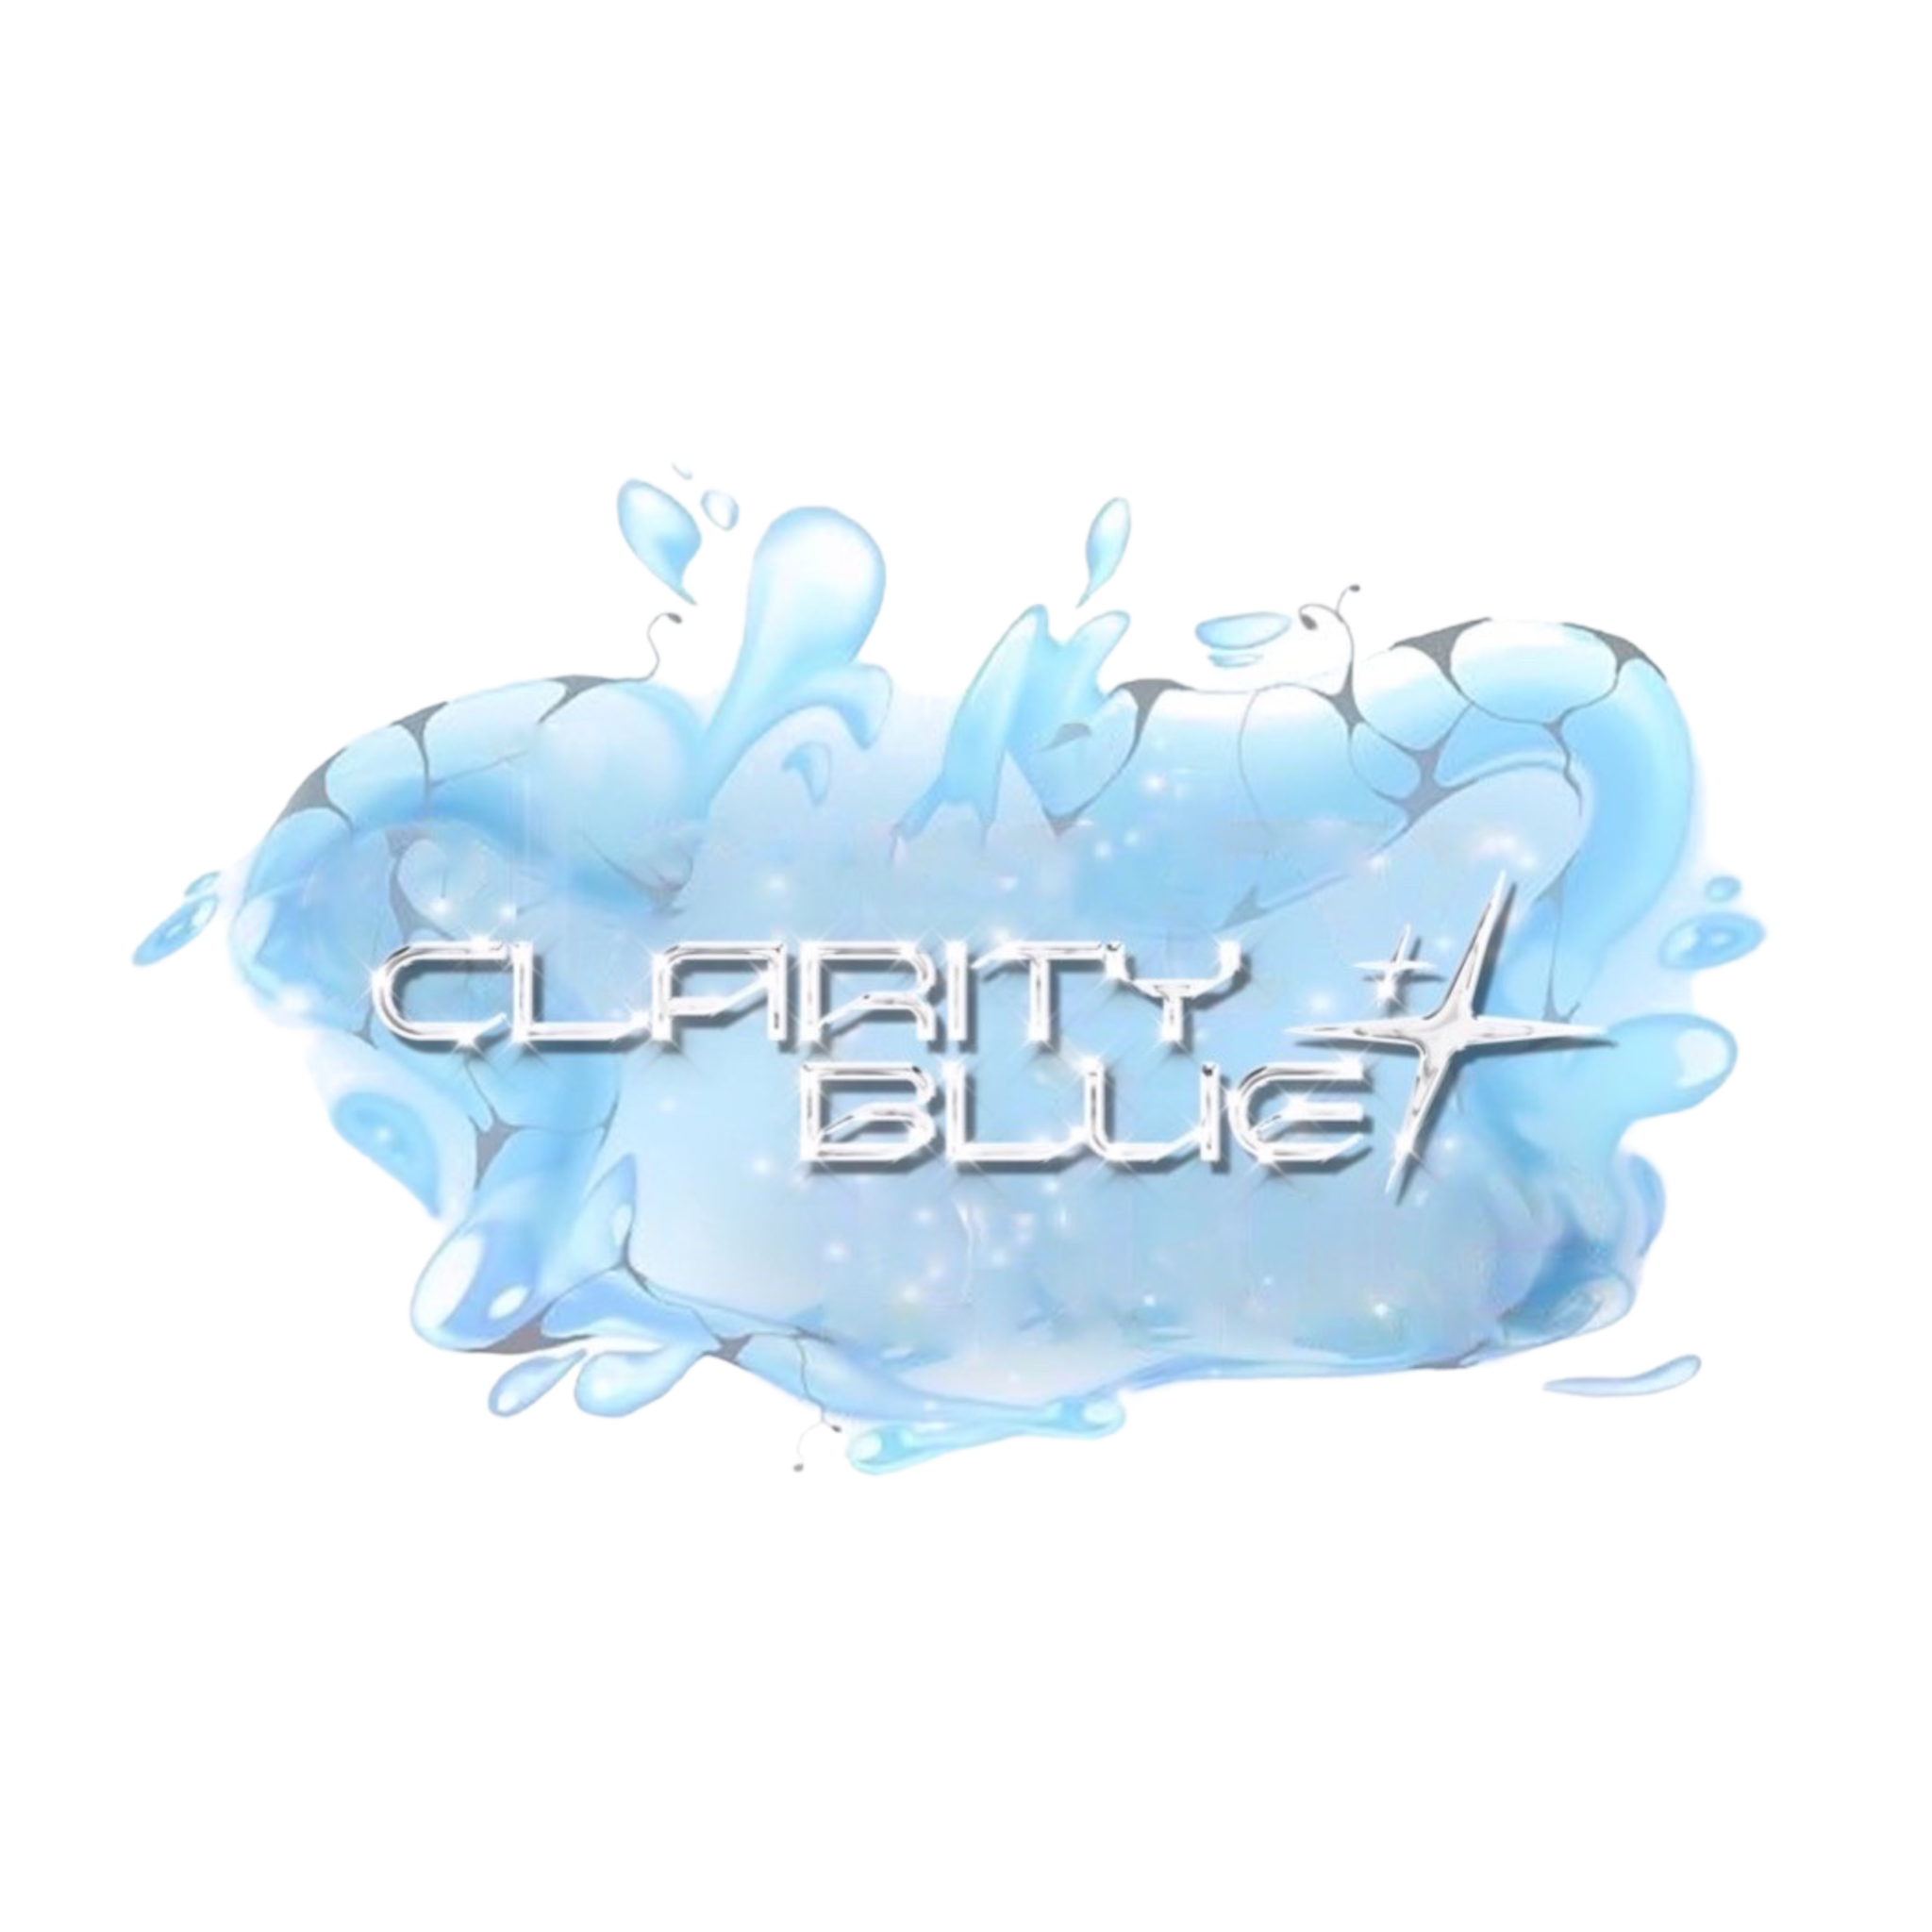 clarity blue